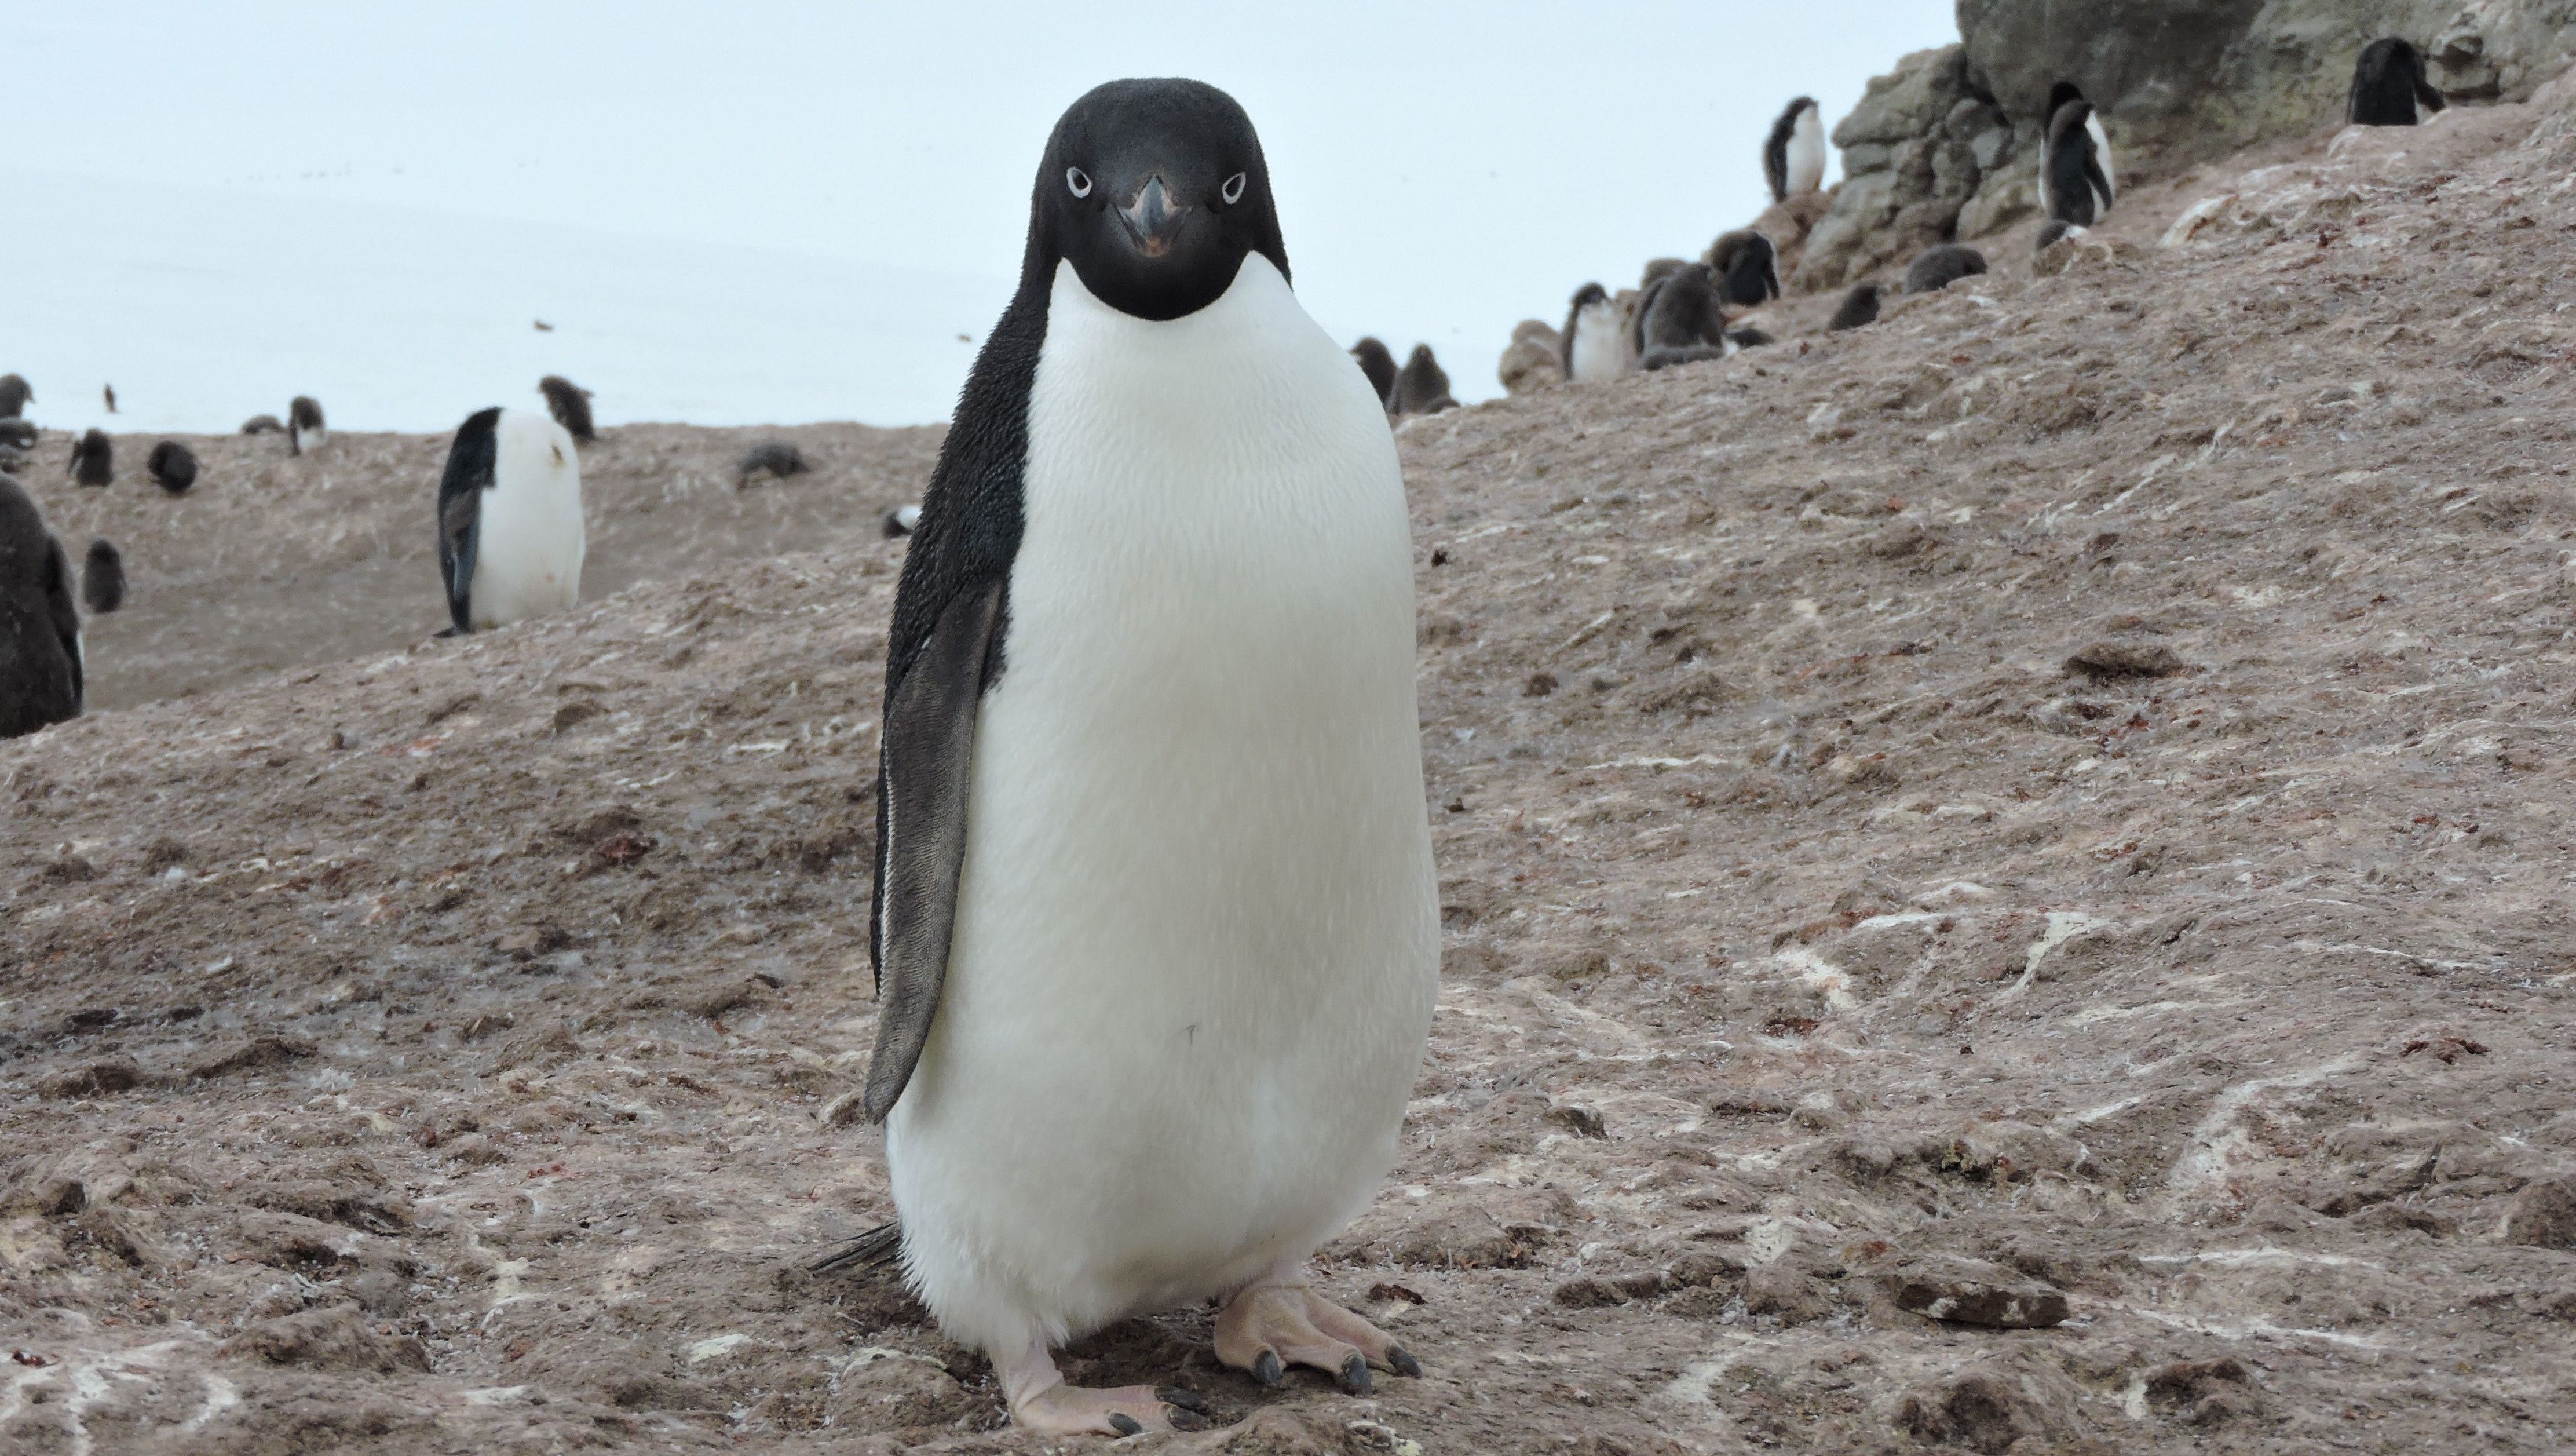 Animals, plants threatened by decreasing Antarctic ice